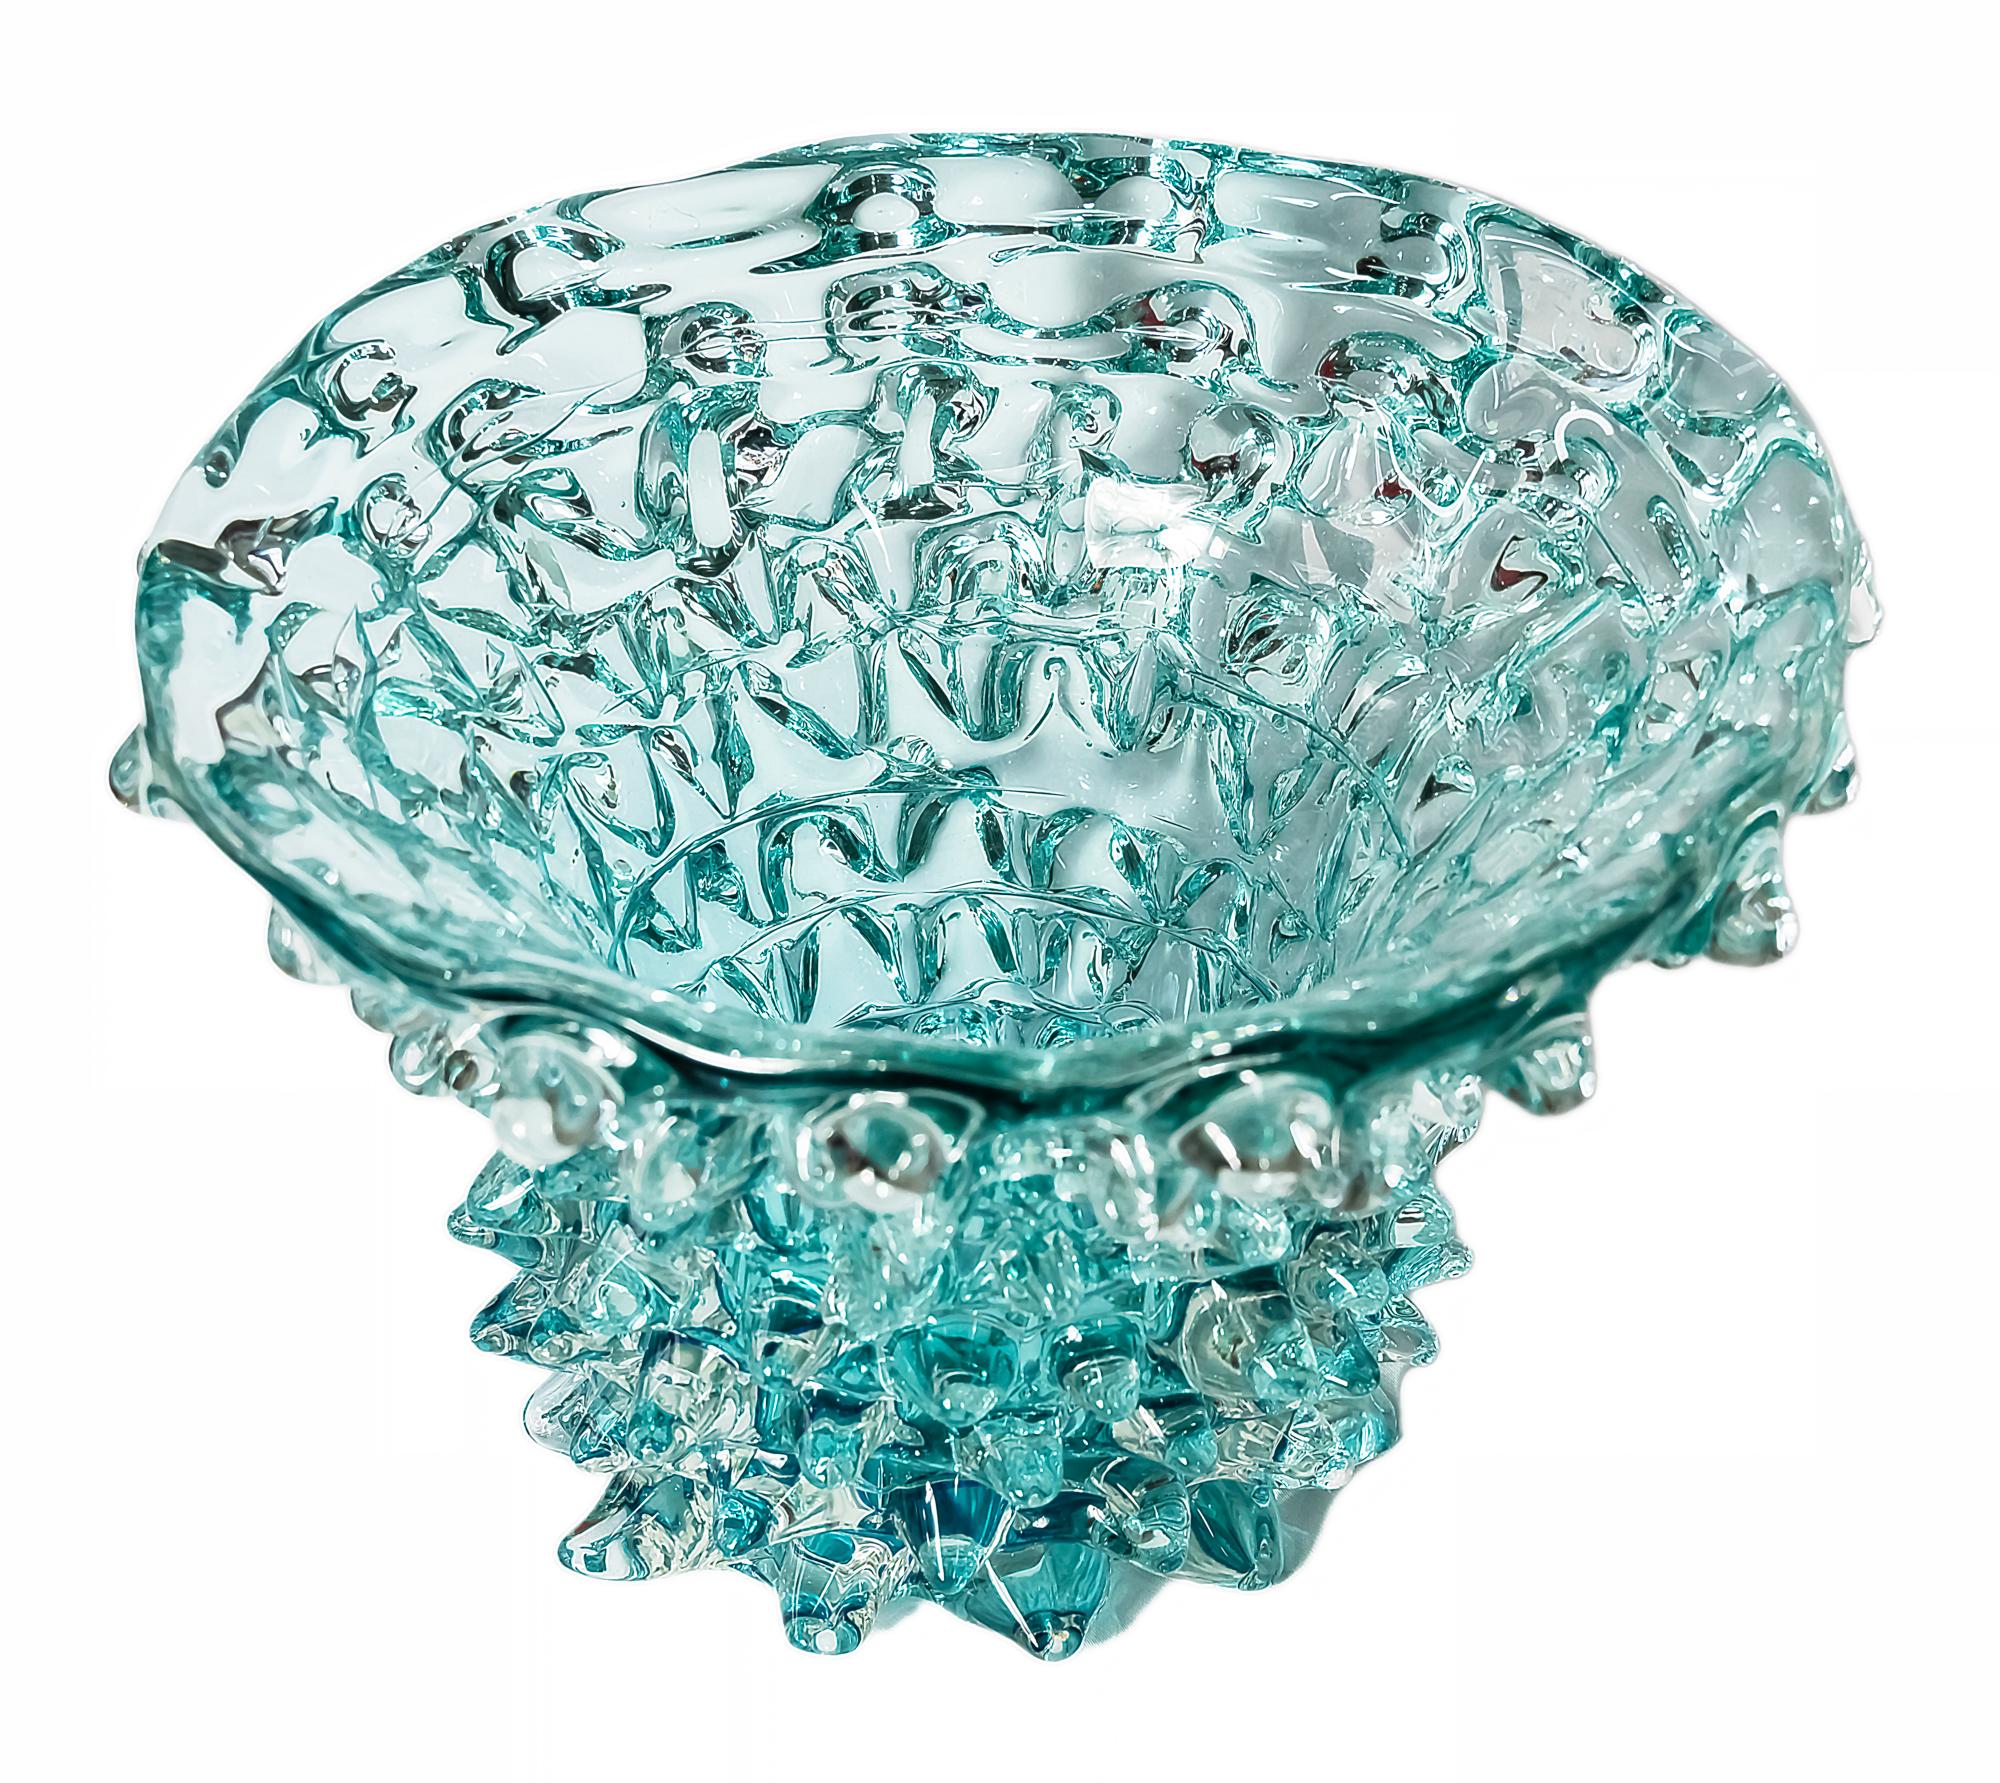 Hand-Crafted Italian Handmade Murano Glass Vase, Signed E. Camozzo